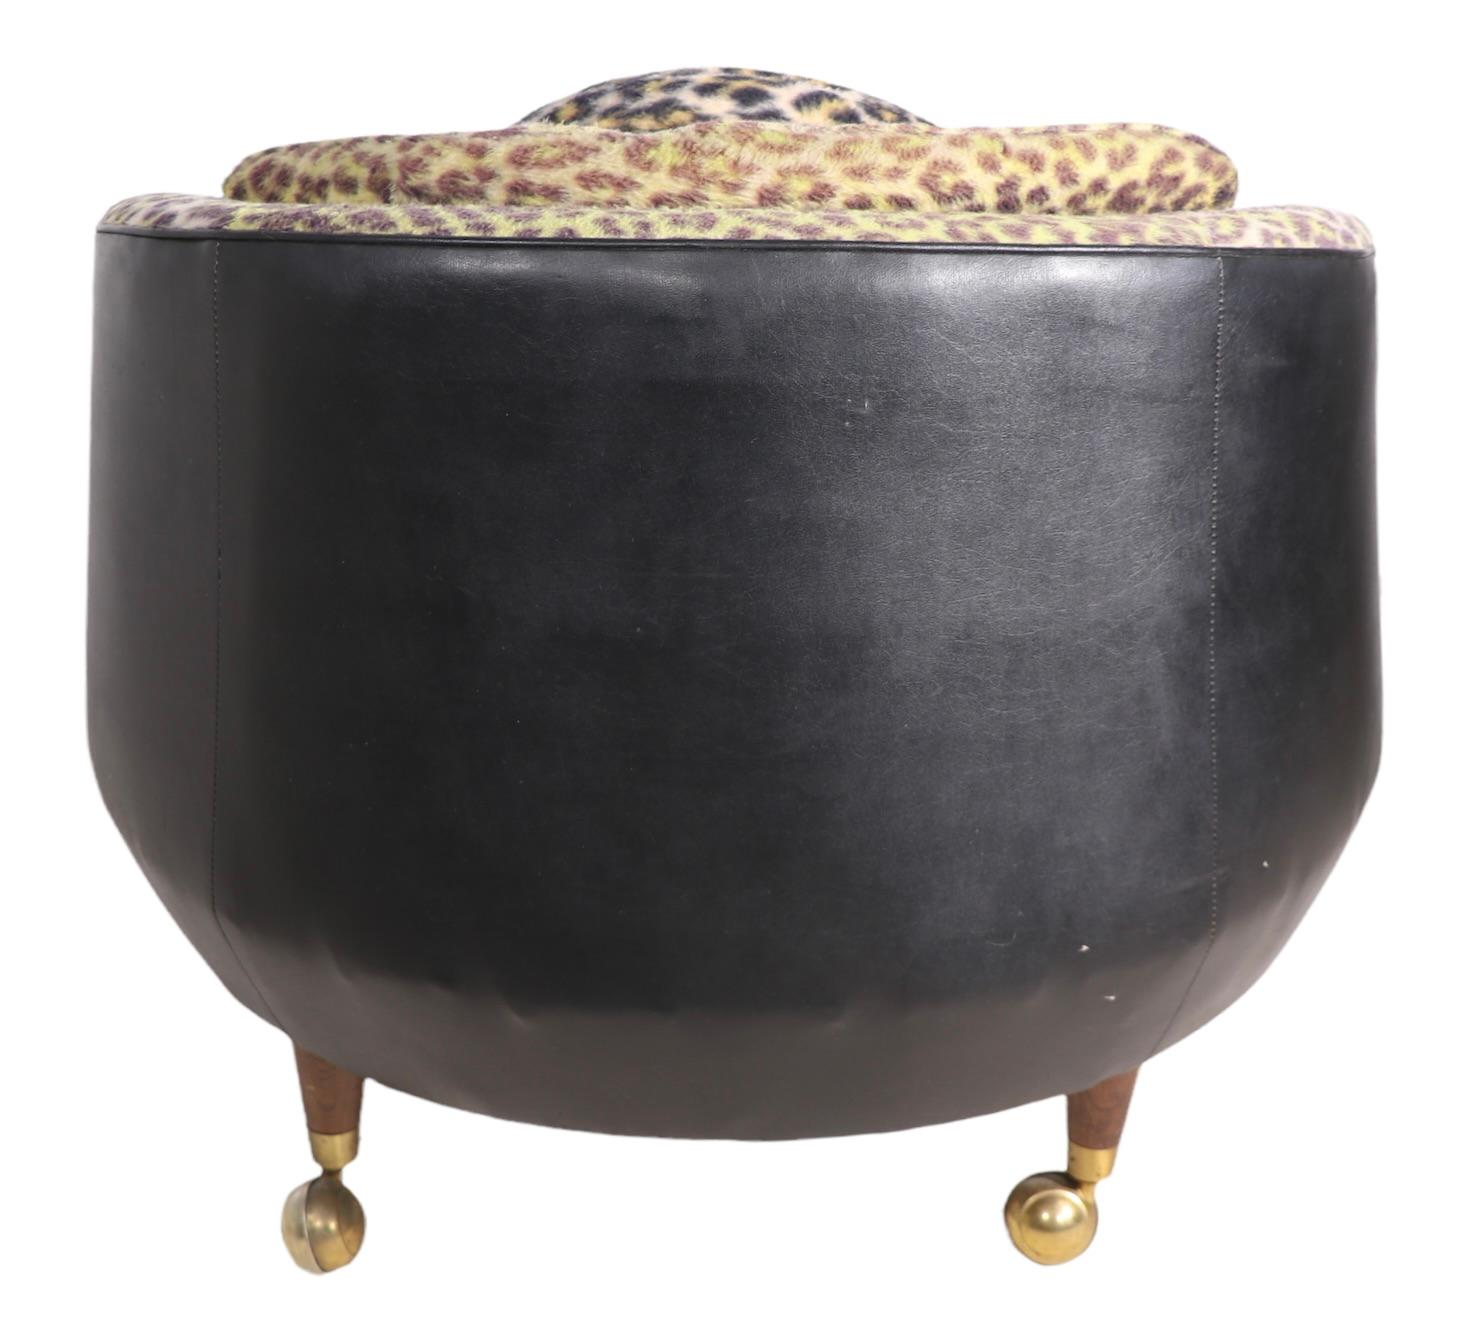 Pearsall Havana Lounge Chair in Faux Cheetah Fur Fabric and Black Vinyl 3